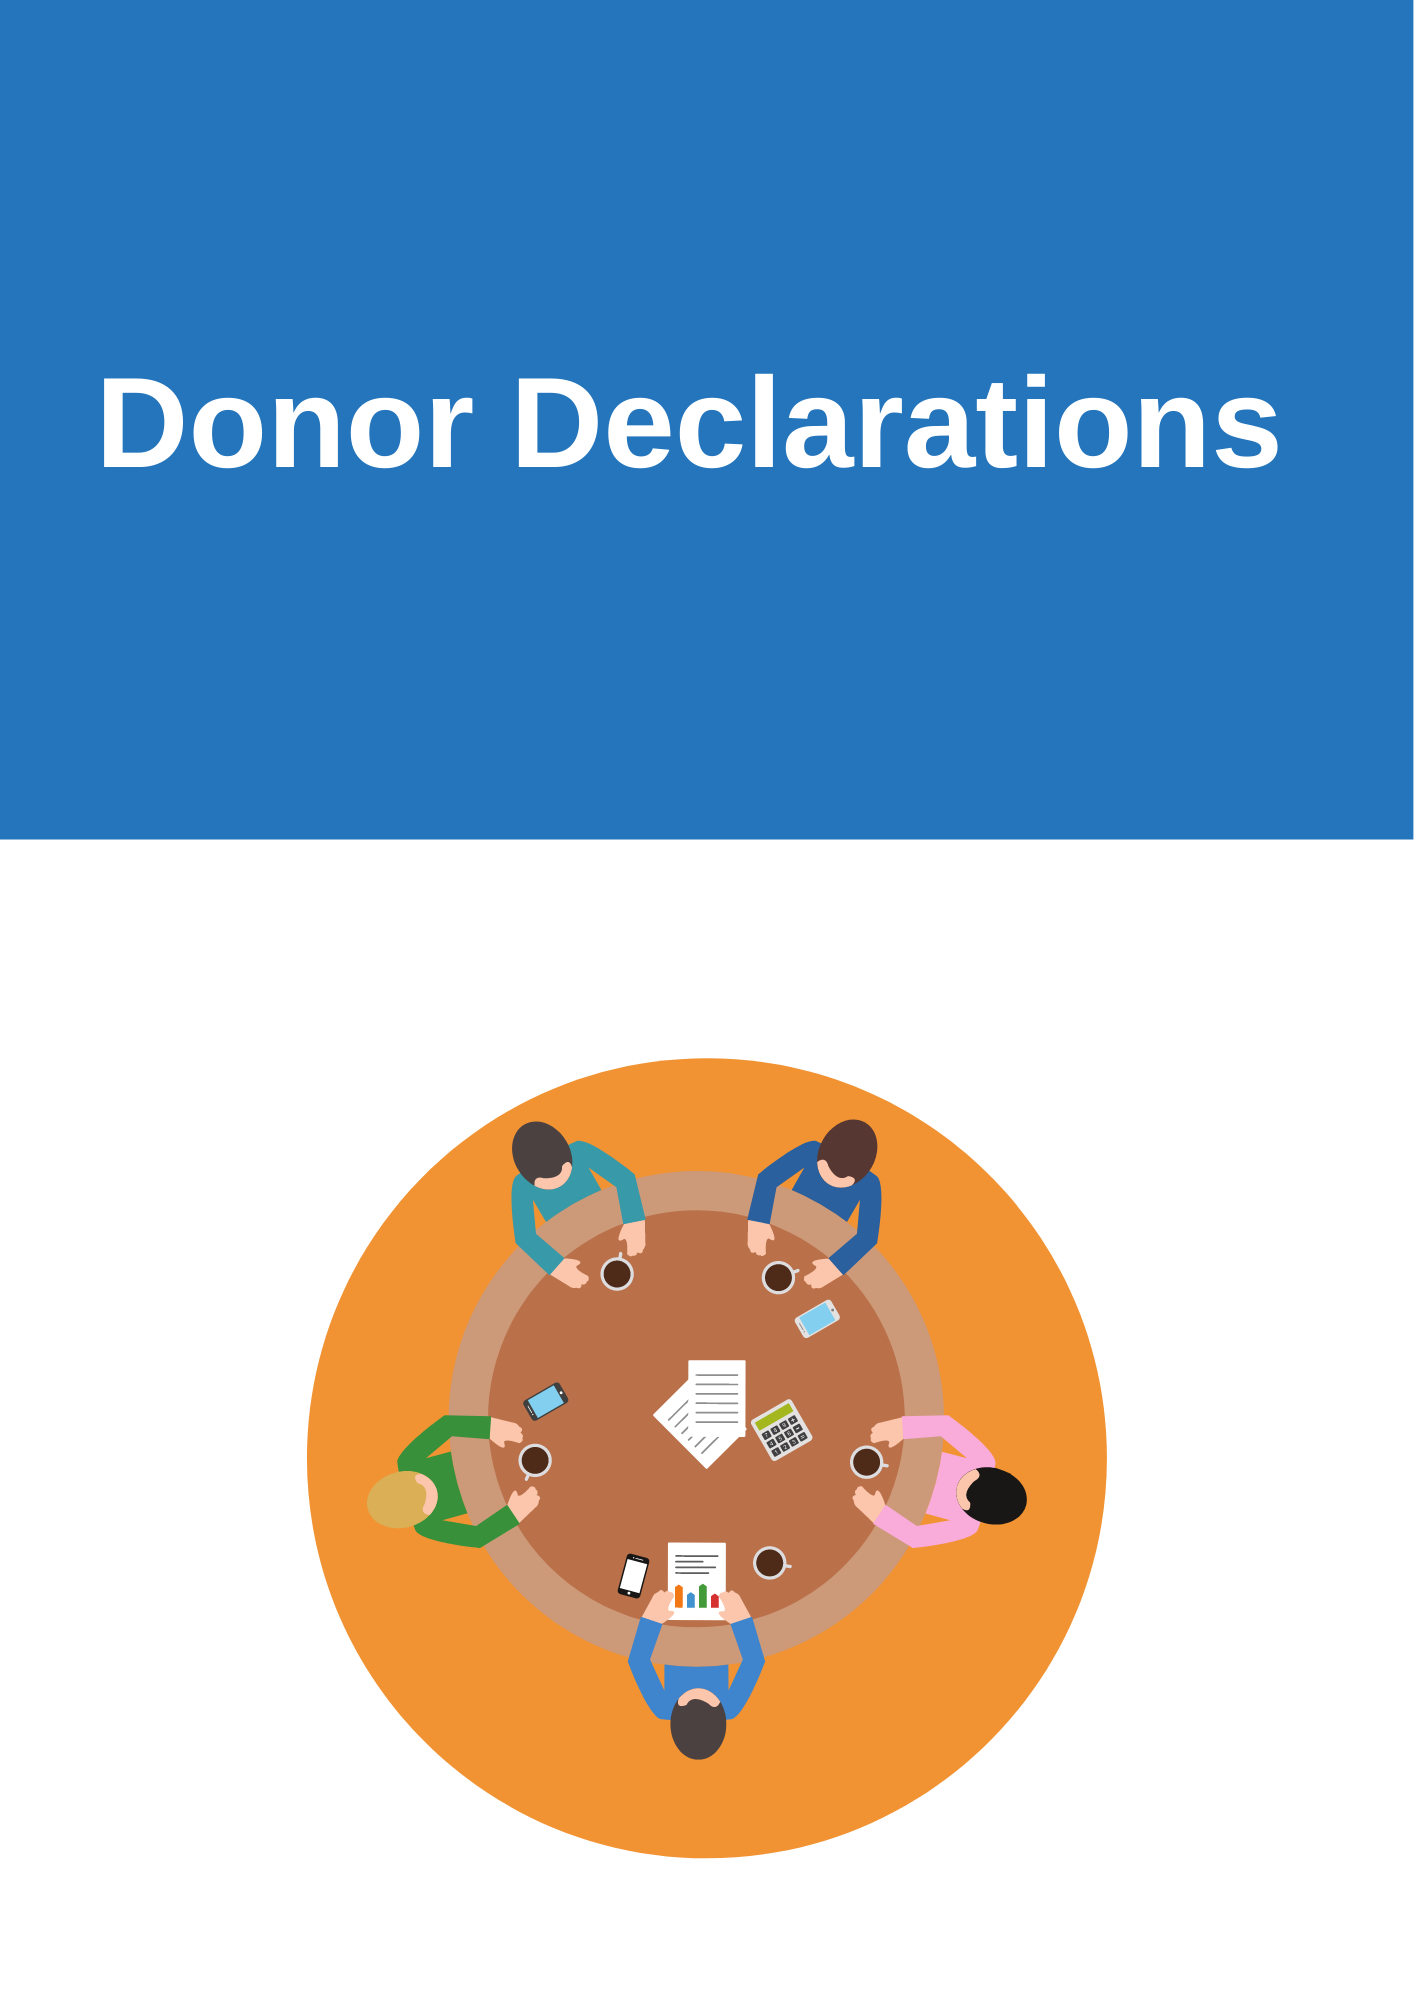 Donor declarations